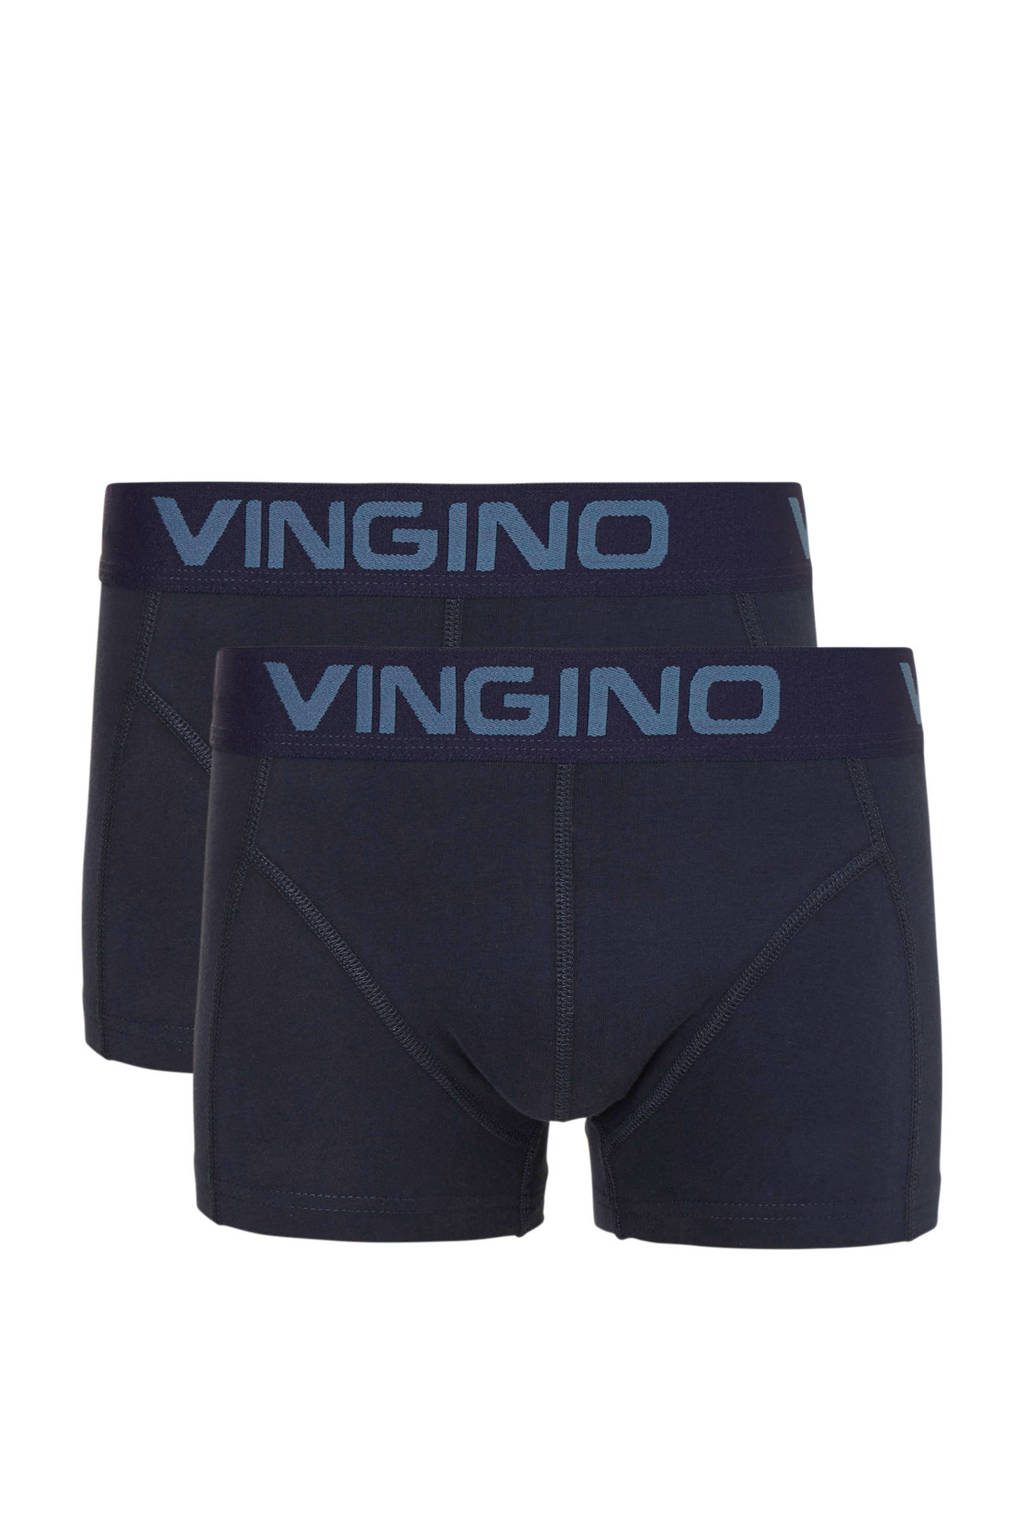 Vingino   boxershort - set van 2 donkerblauw